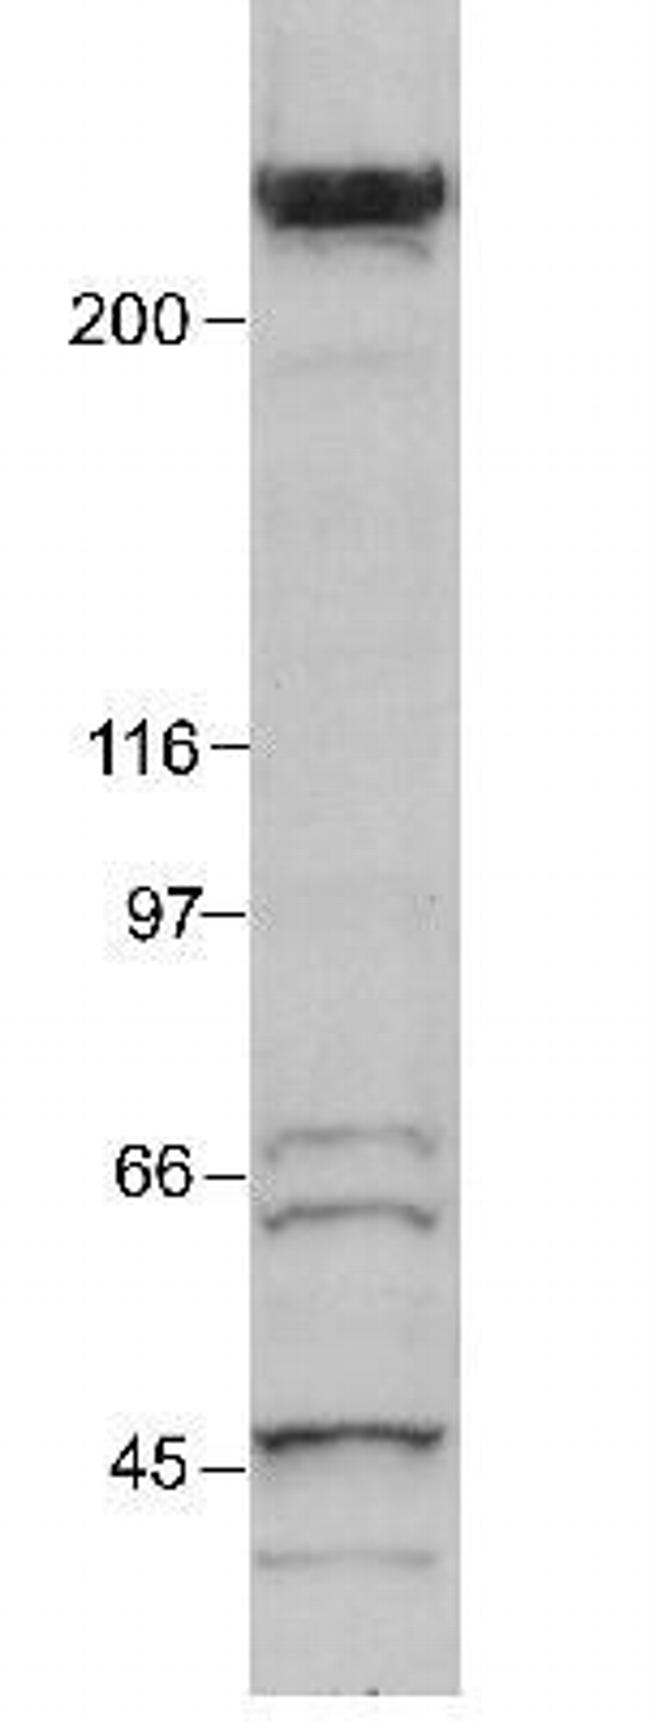 p300 Antibody in Western Blot (WB)